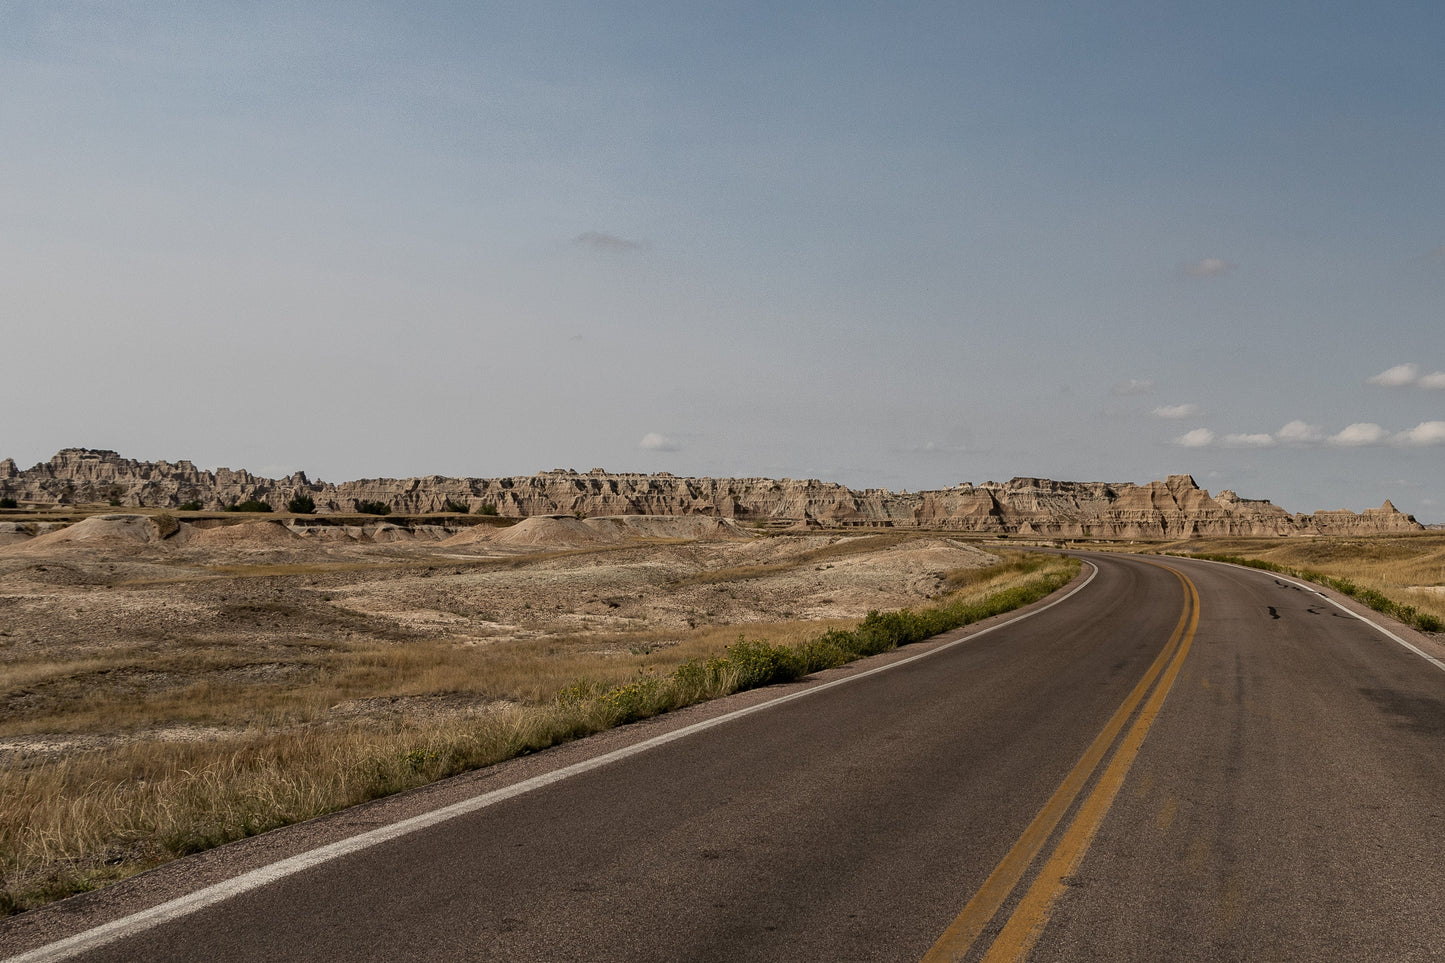 Highway Through the Badlands of South Dakota